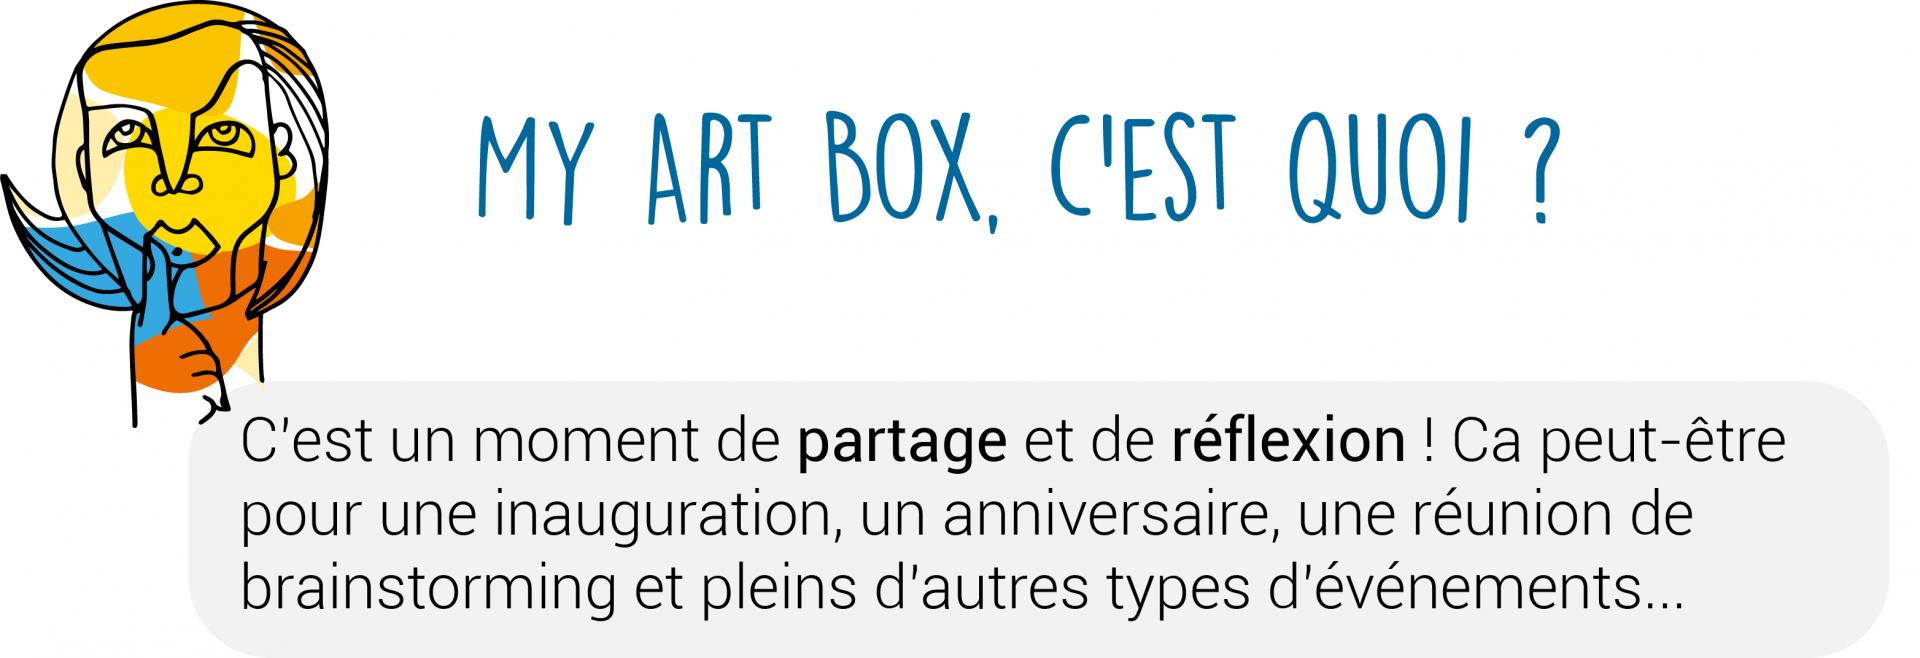 Art box